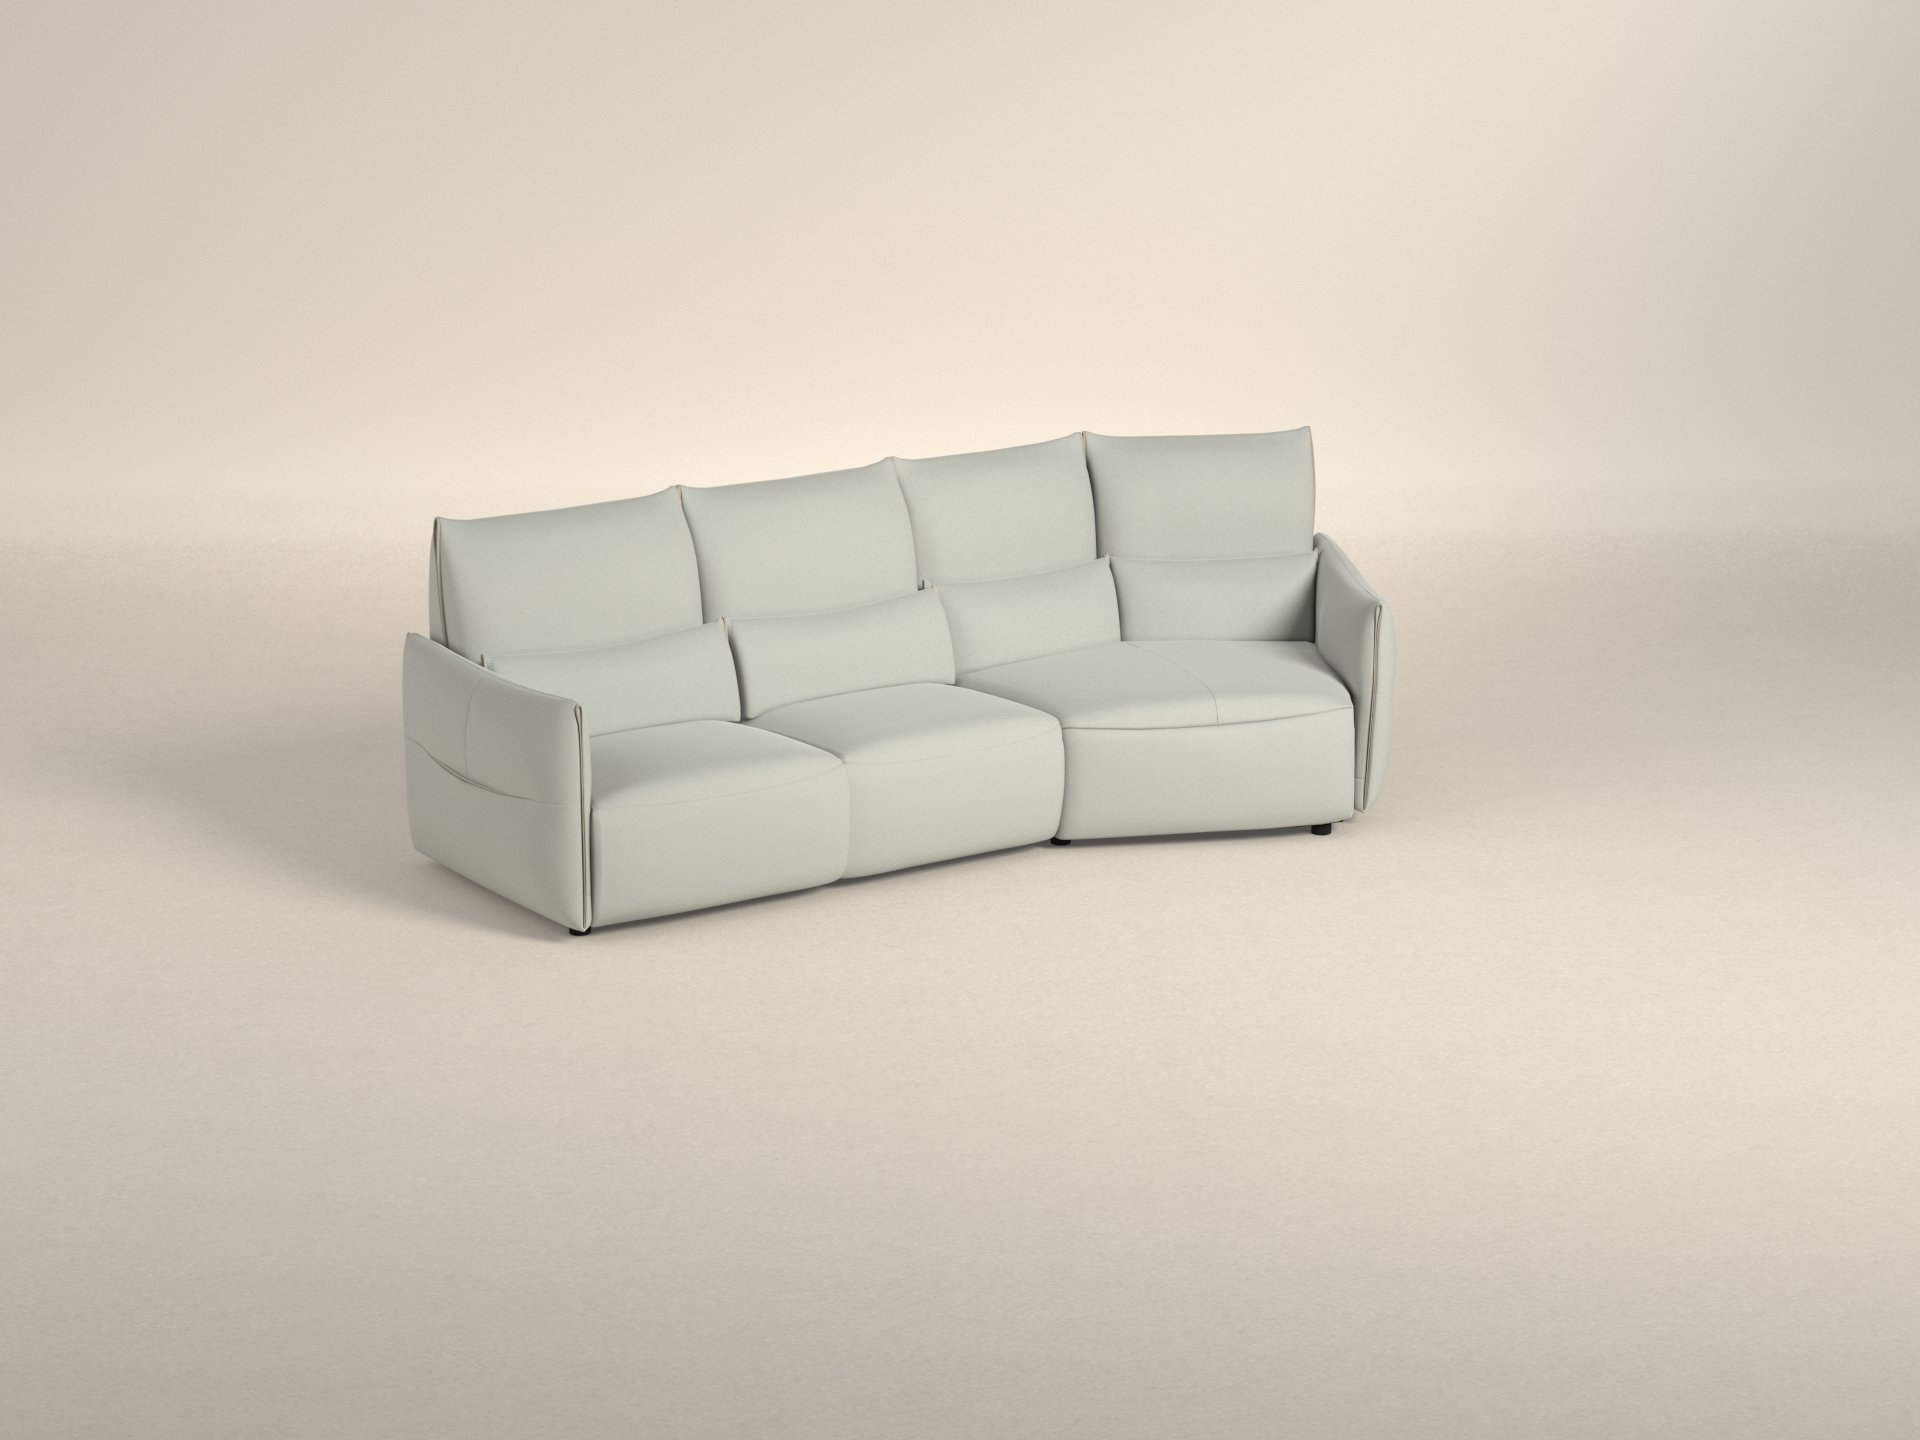 Preset default image - Wellbe 带右侧转角座椅的沙发 - 織物